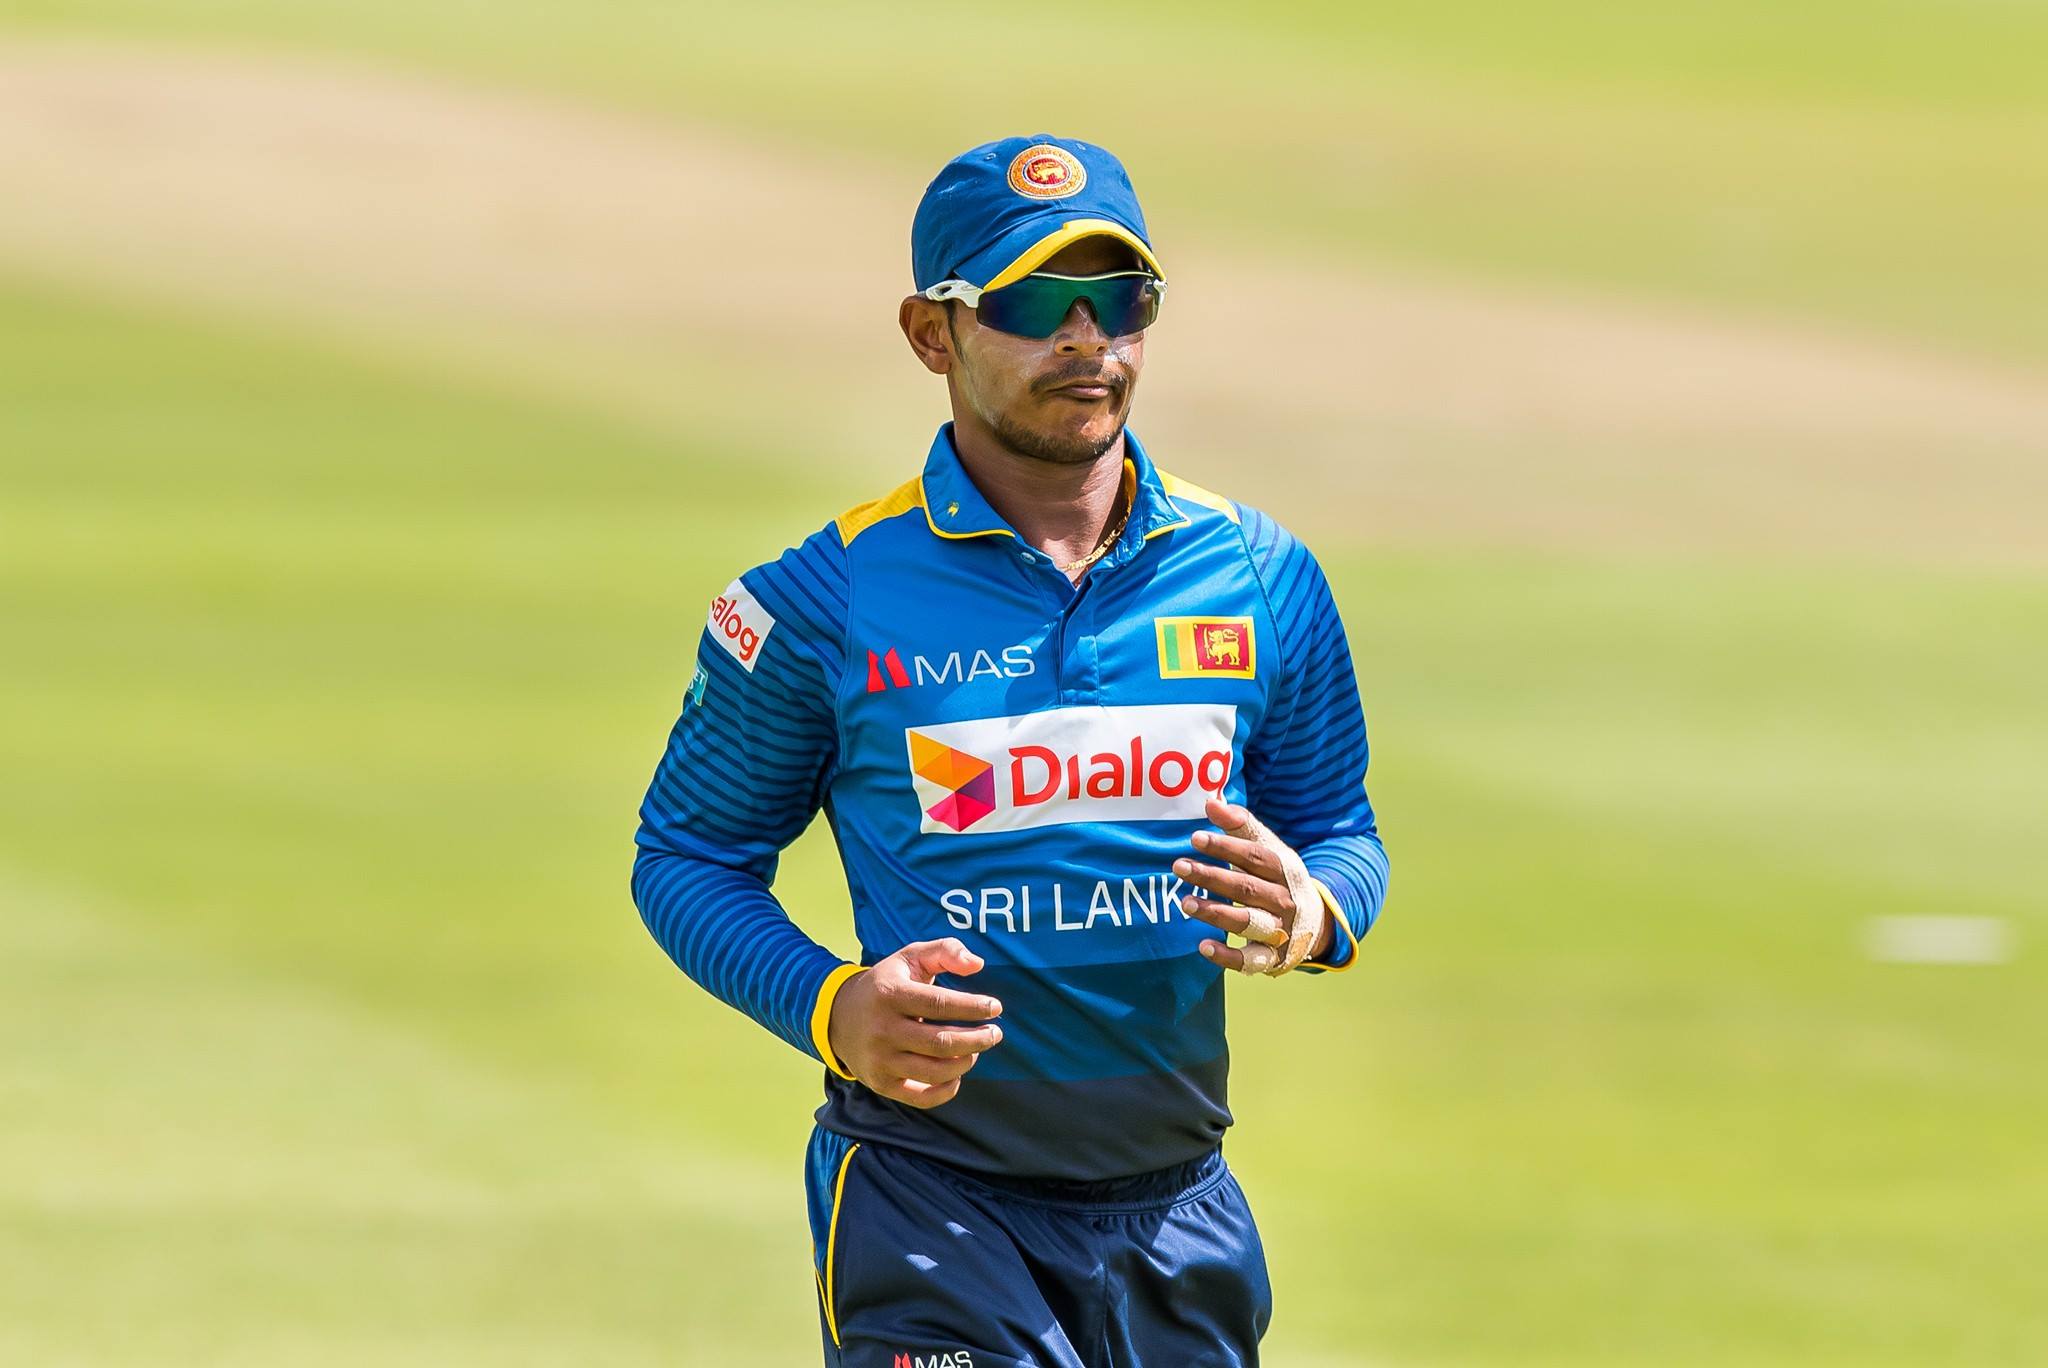 Sri Lanka Cricketer Sandun Weerakkody Tests Positive For Covid-19